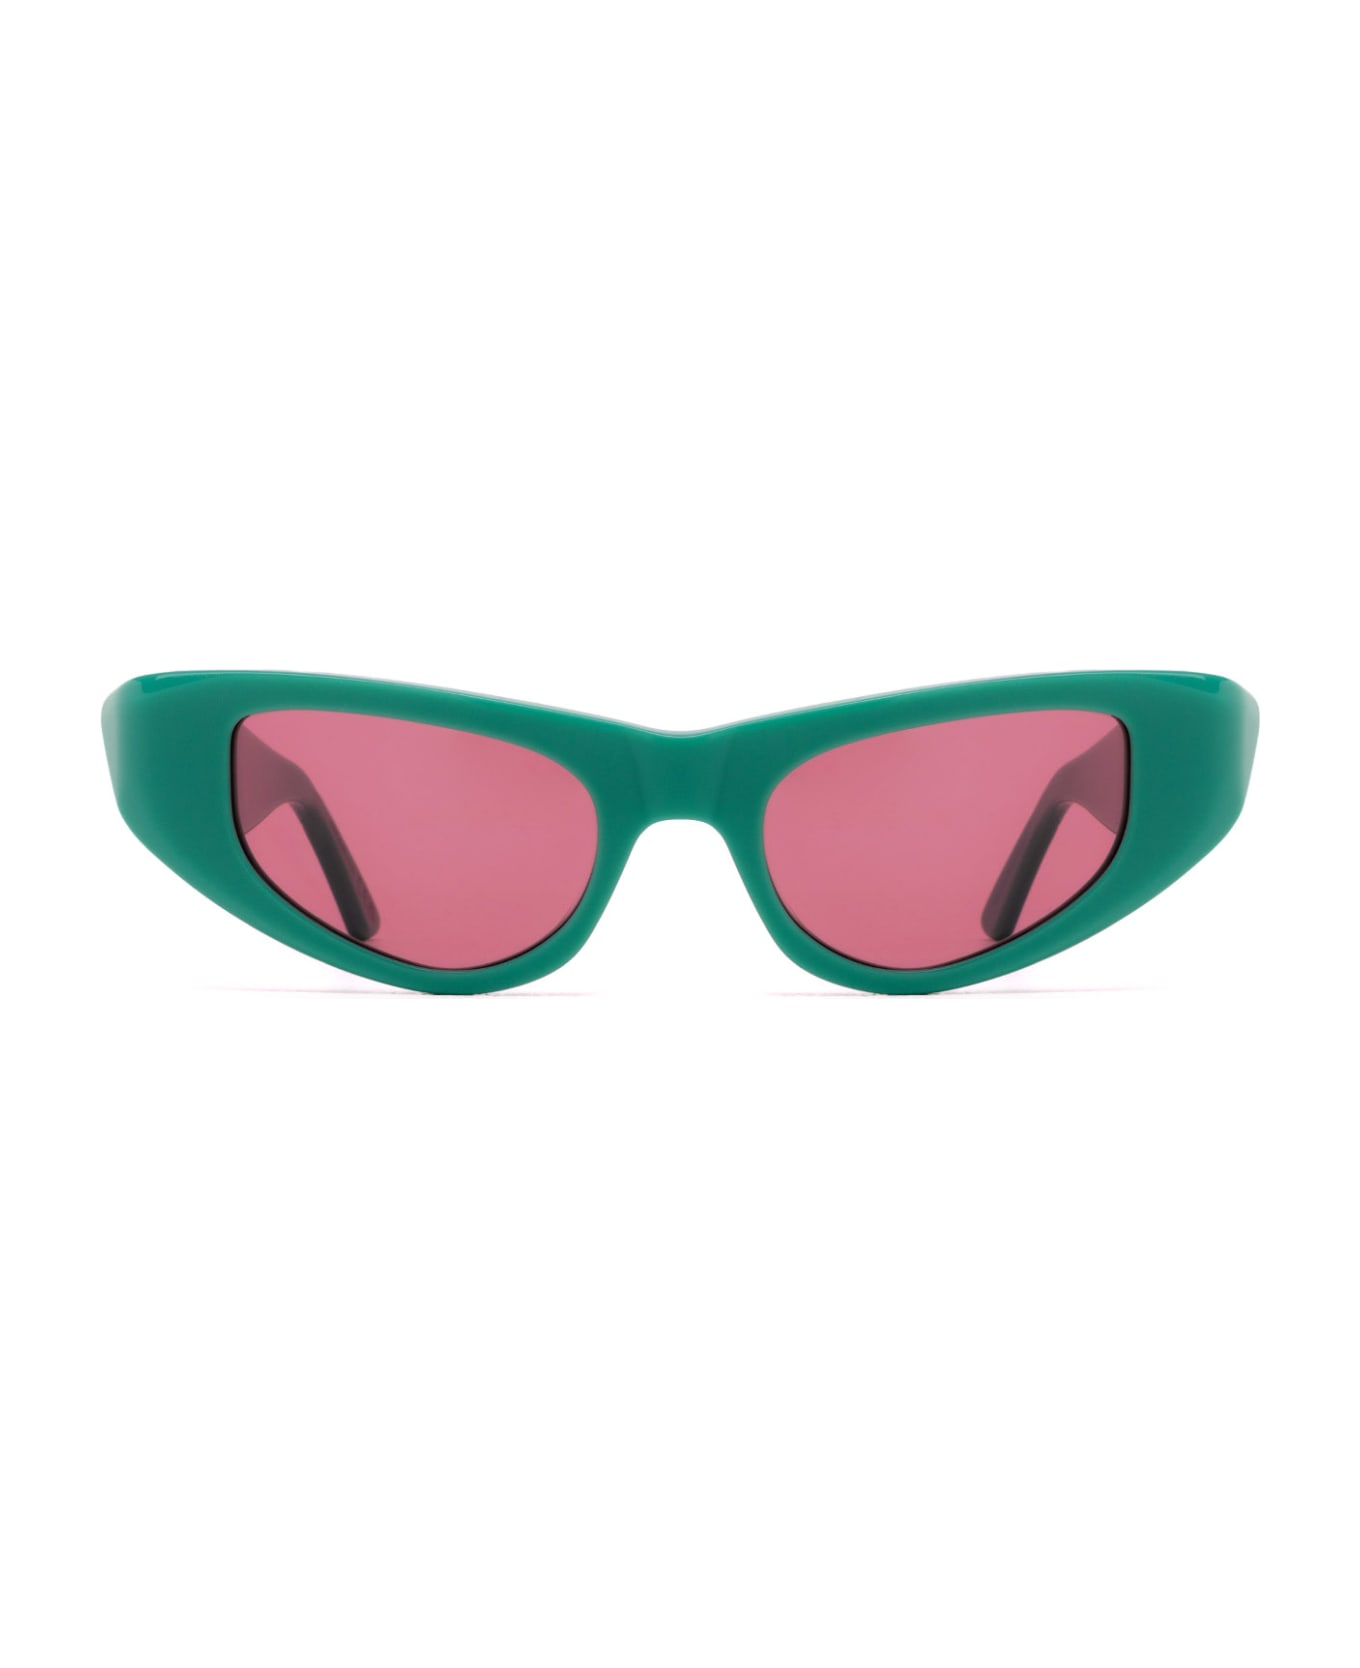 Marni Eyewear Netherworld Green Sunglasses - Green サングラス